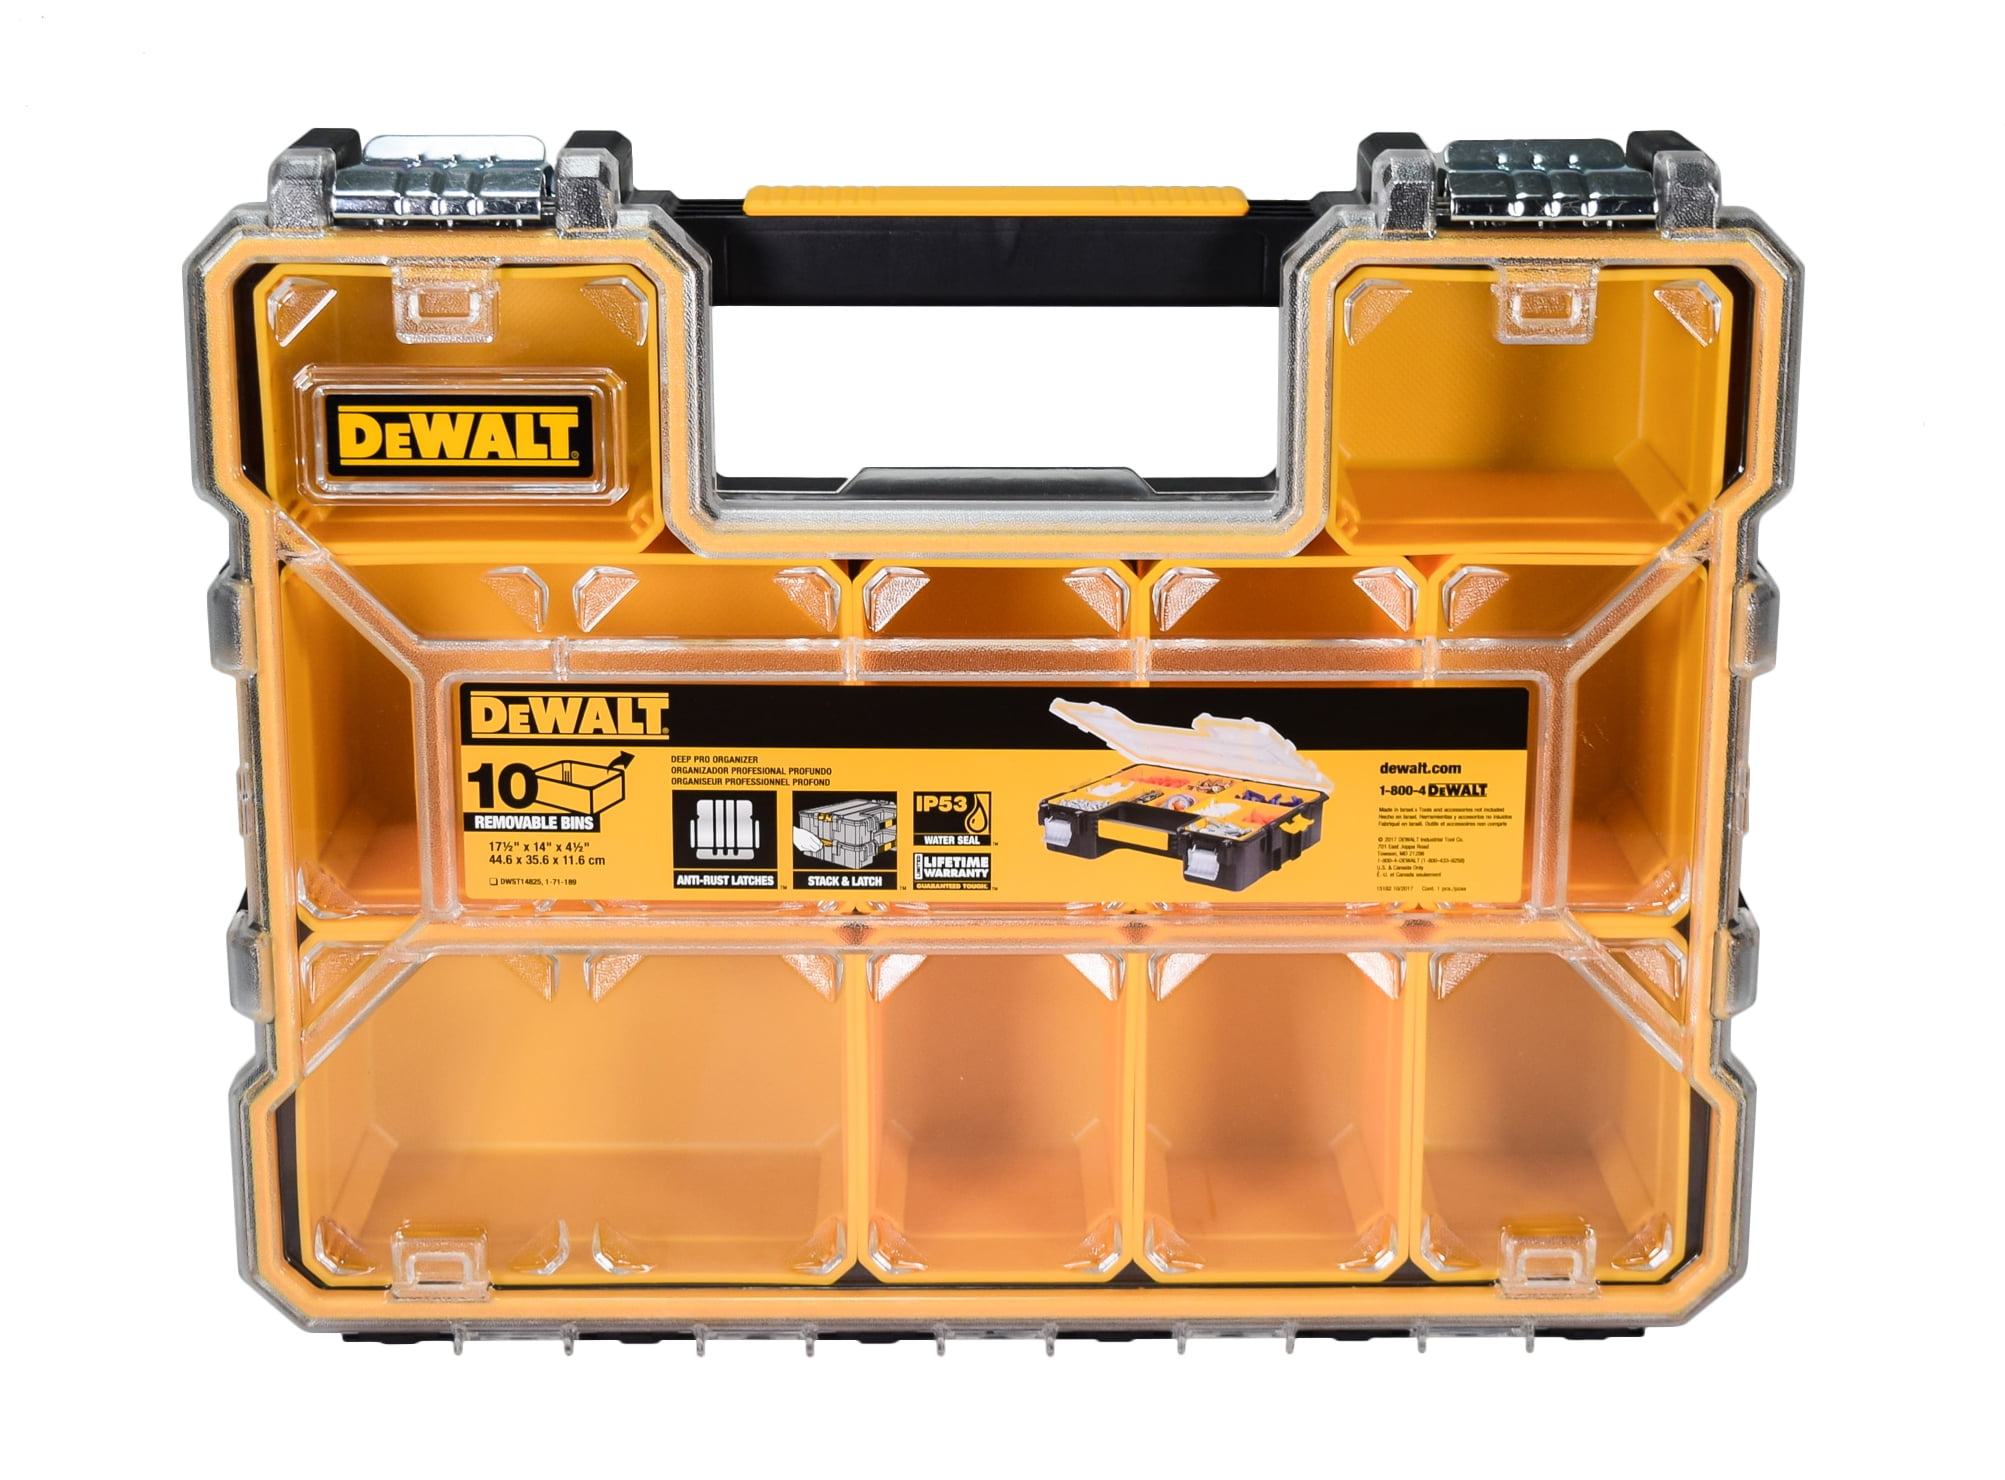 DEWALT DWST14830 Tool Box for sale online 